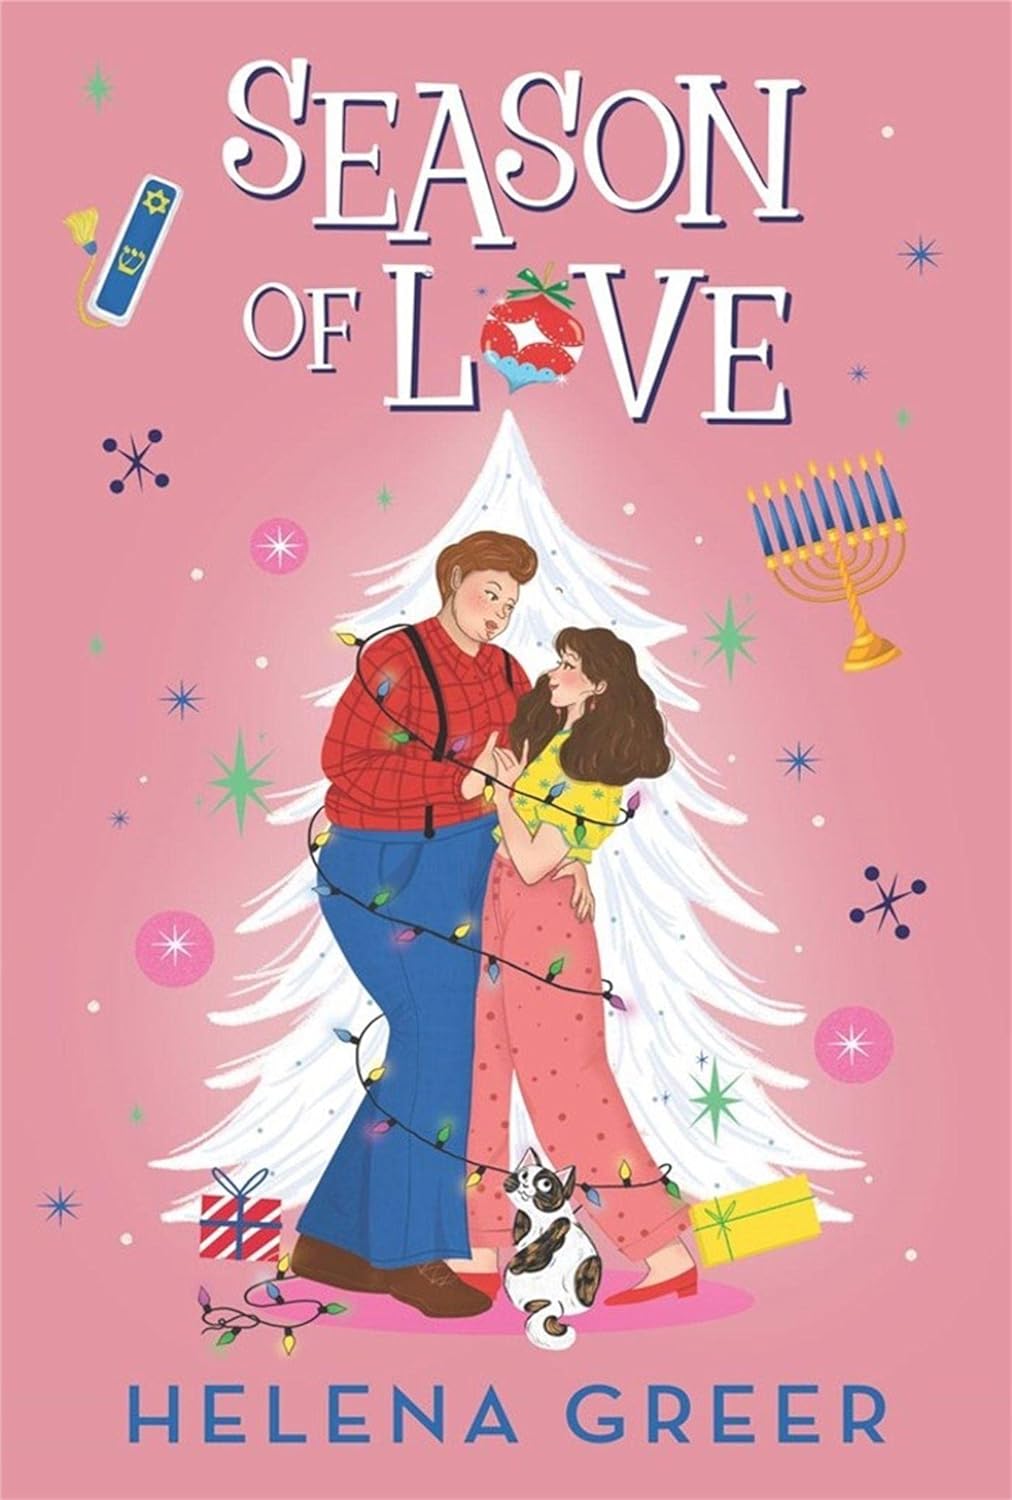 Season of love book cover